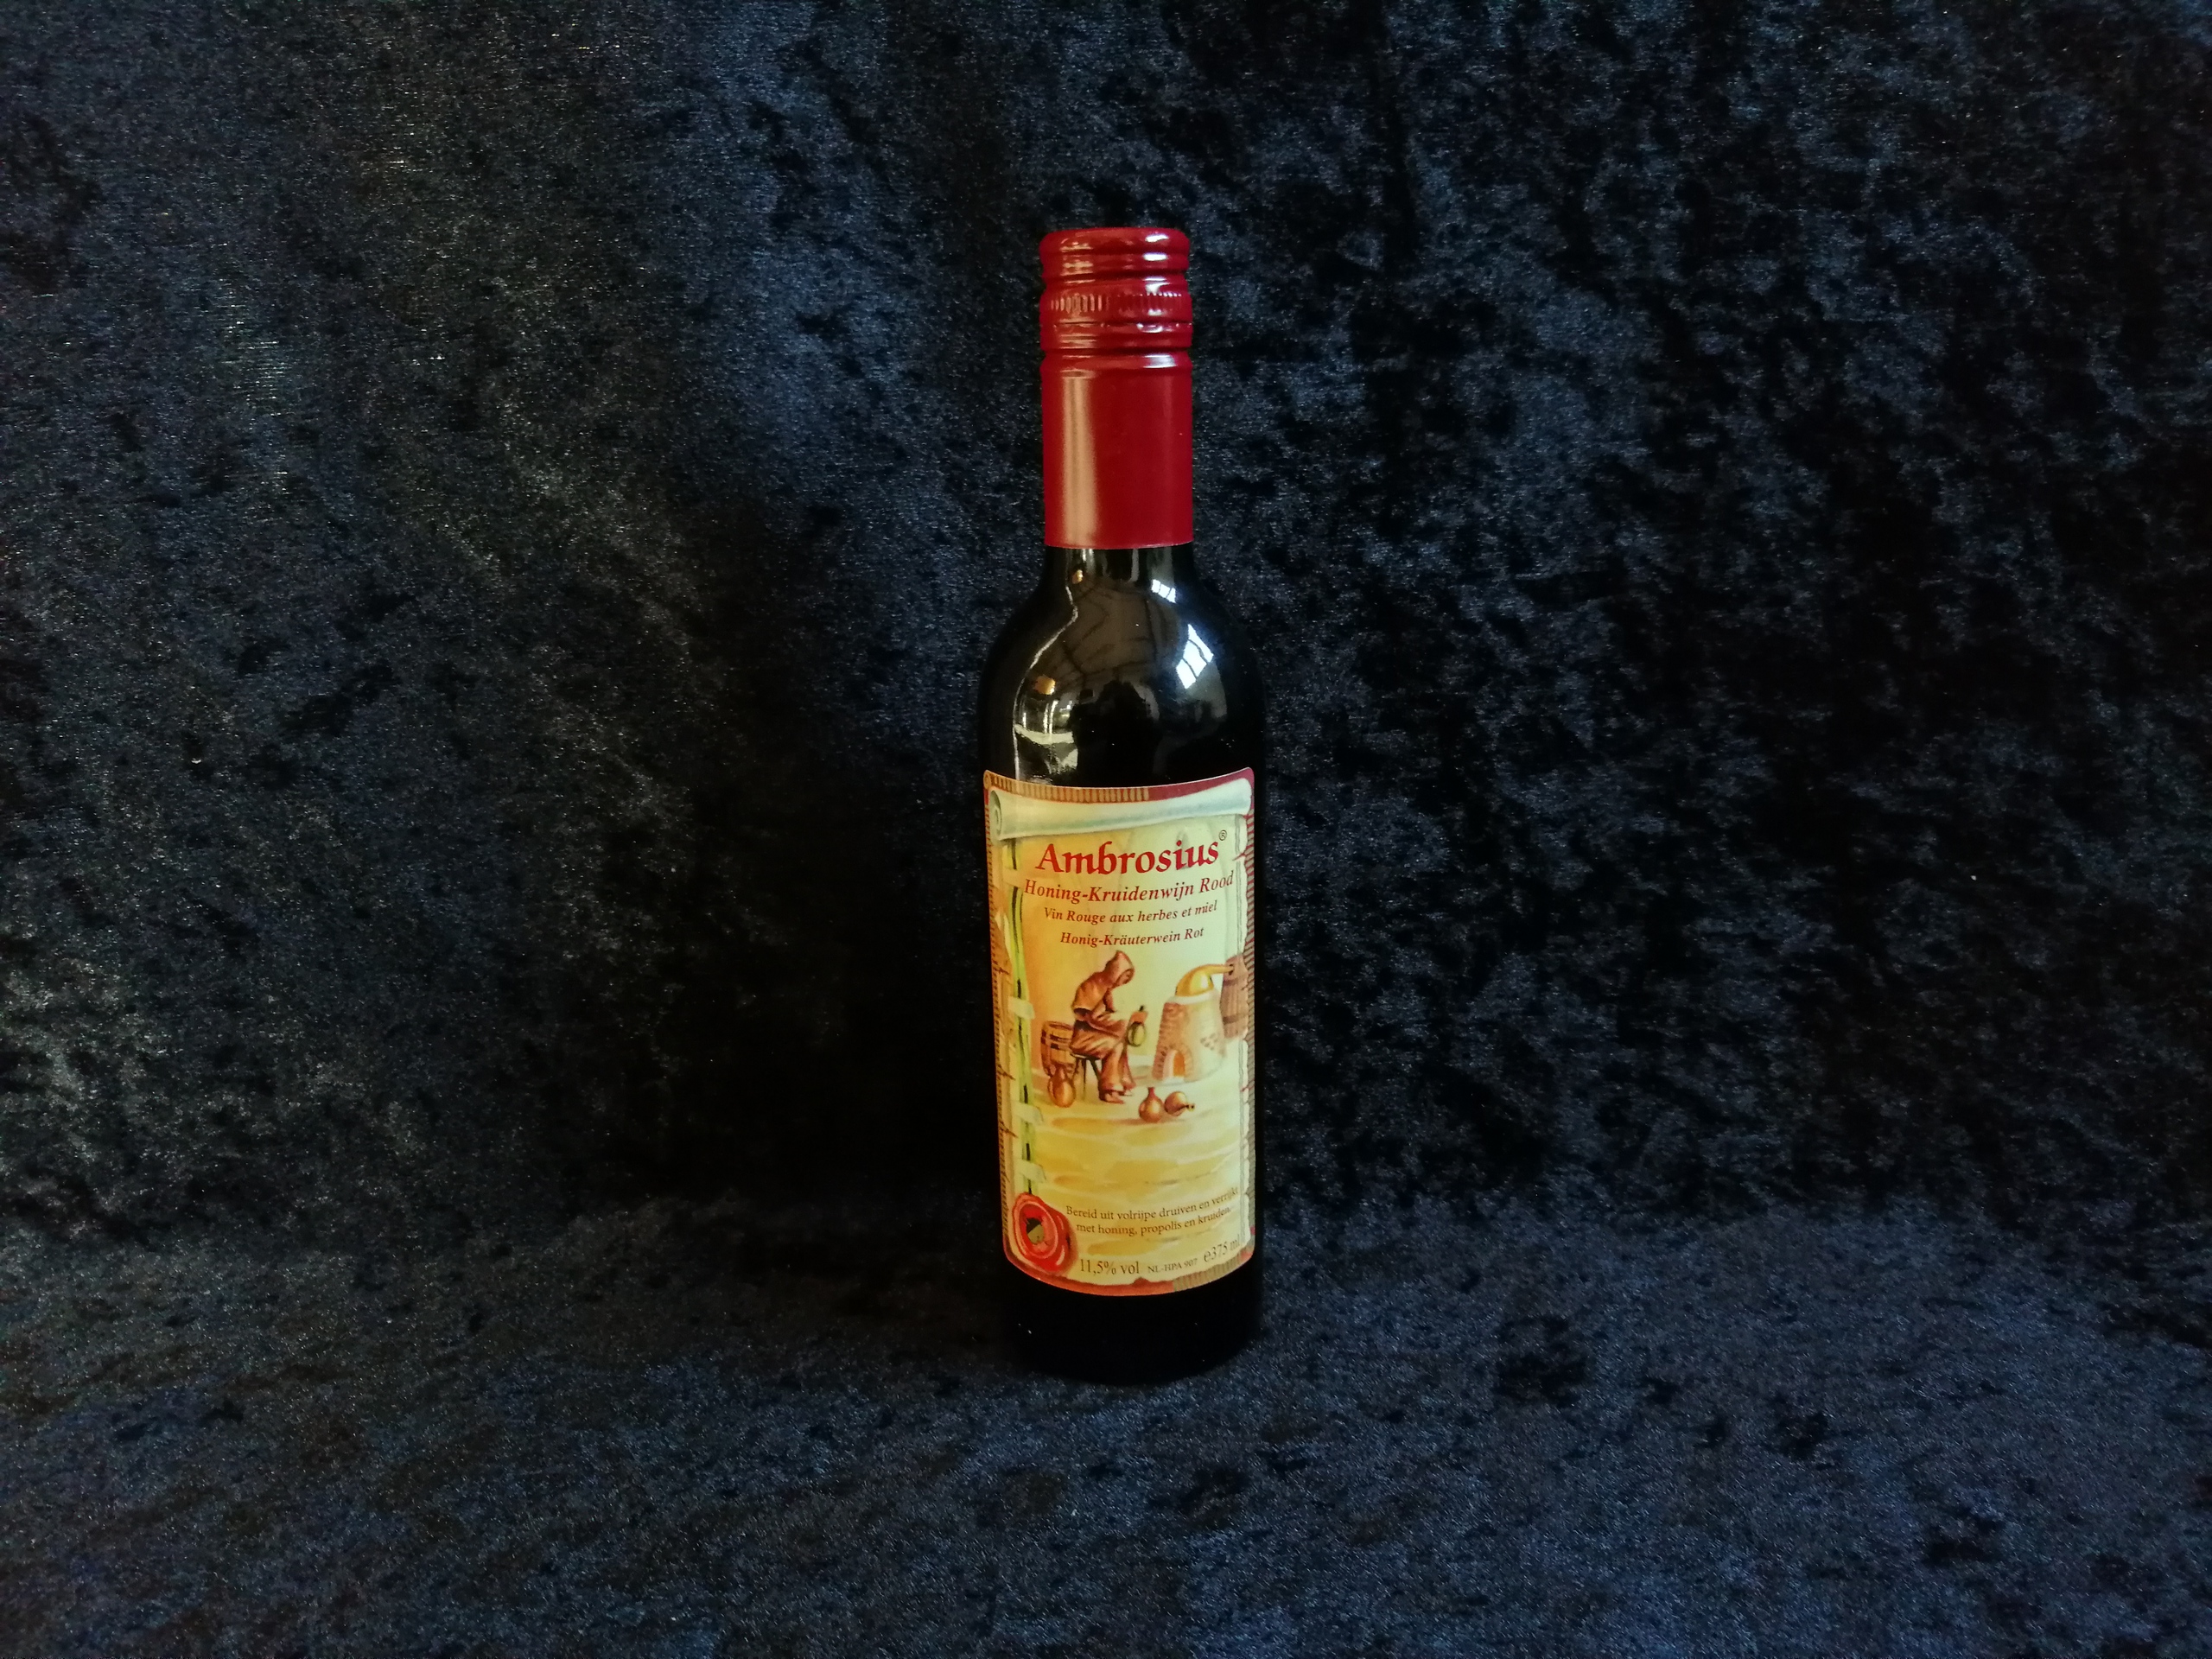 Ambrosius honing-kruidenwijn rood 375ml